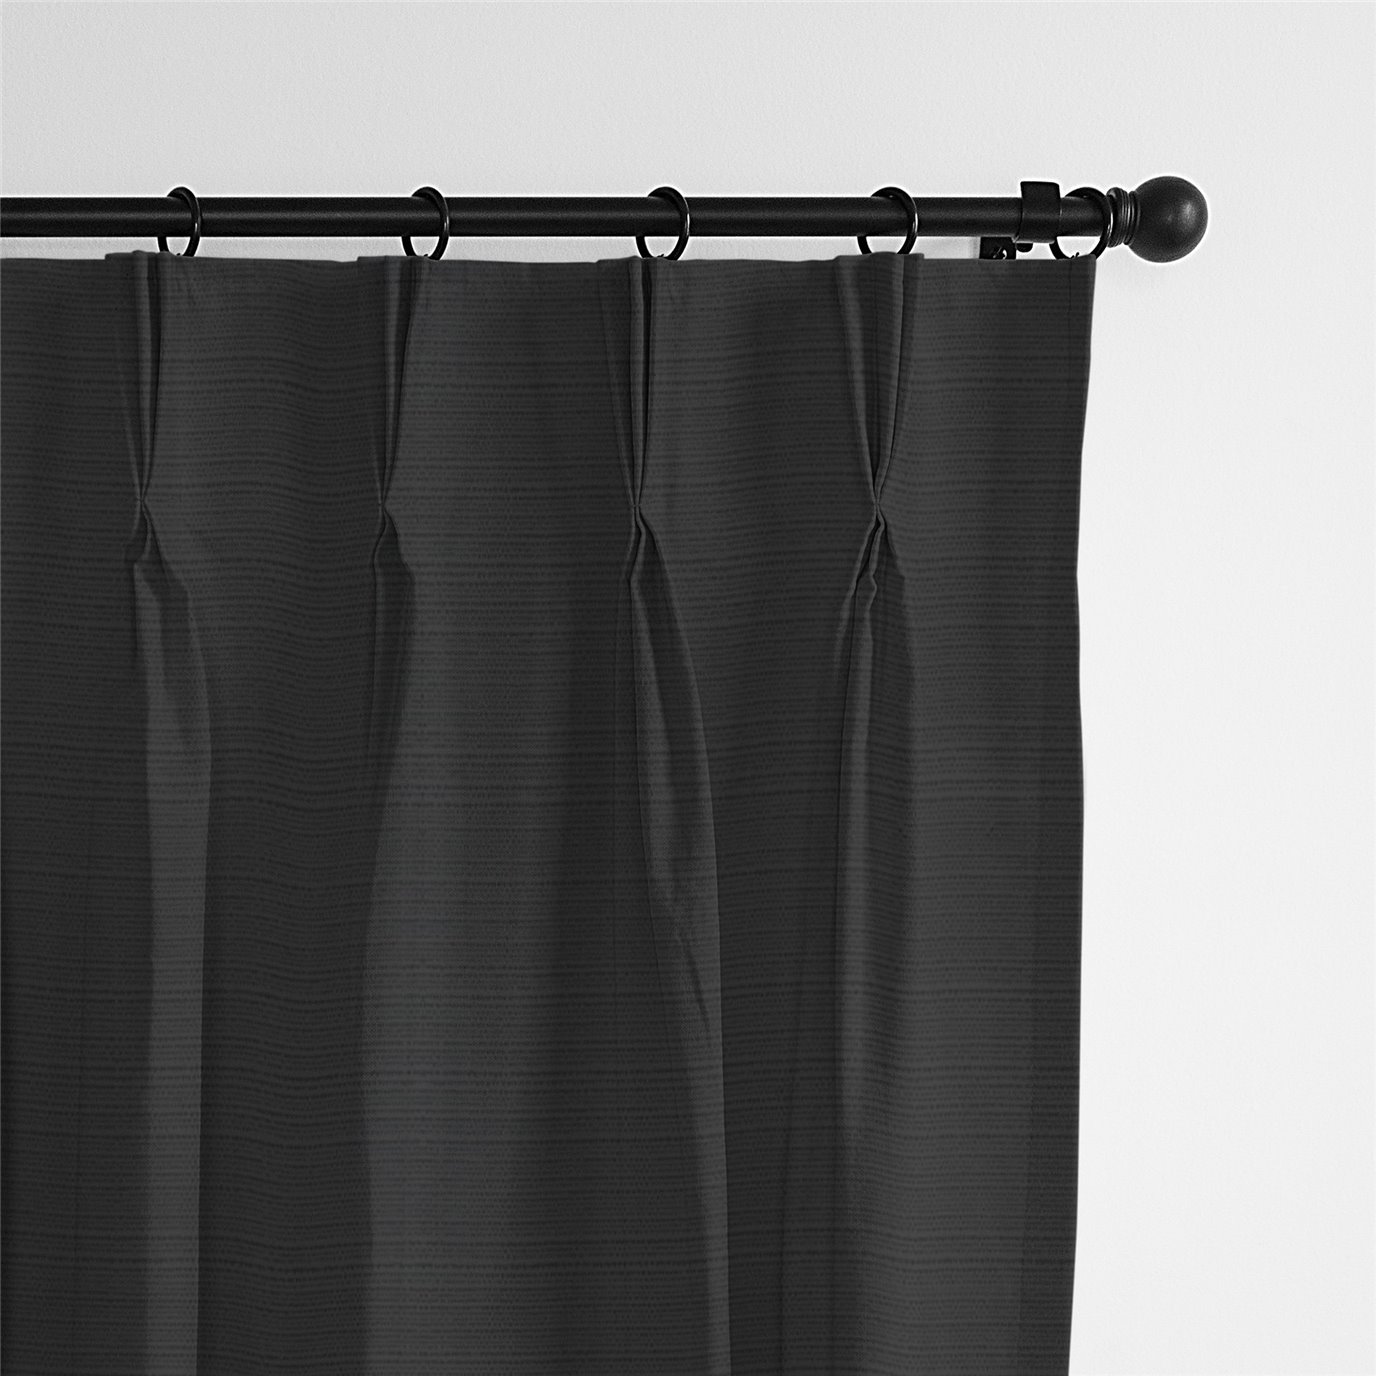 Nova Black Pinch Pleat Drapery Panel - Pair - Size 40"x84"